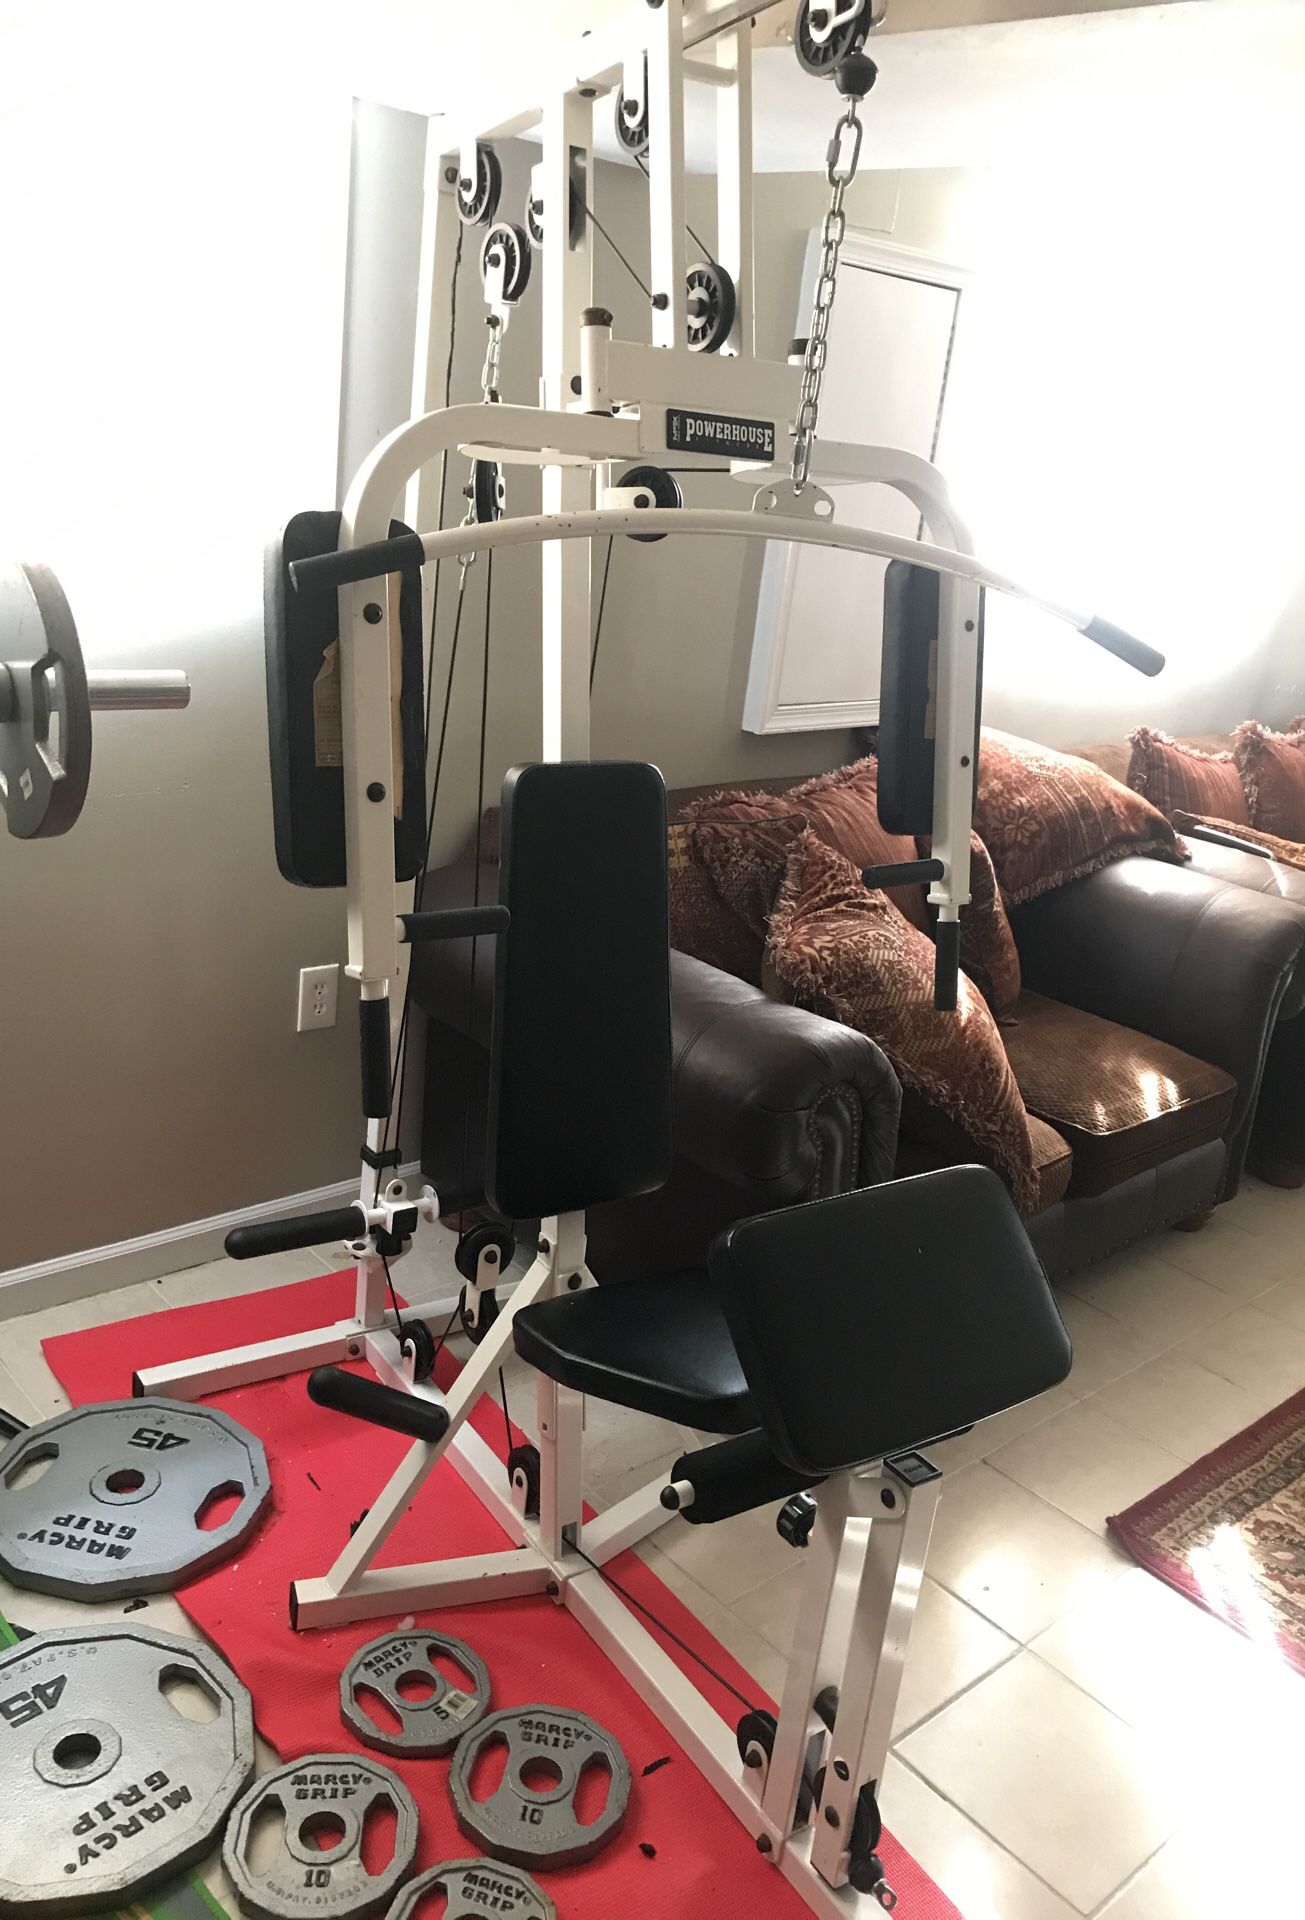 Powerhouse fitness gym equipment